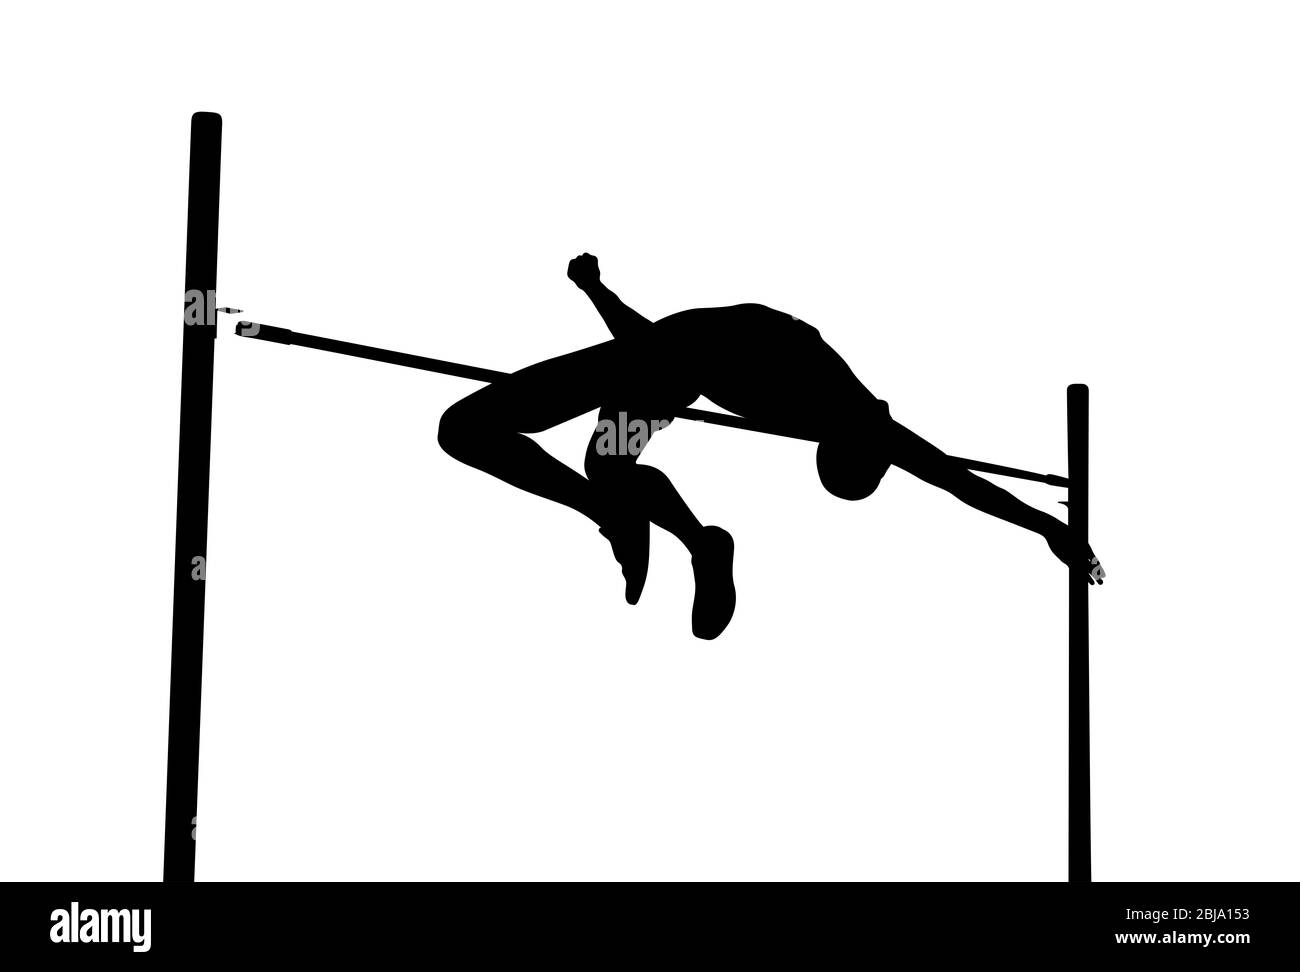 failed attempt high jump man athlete black silhouette Stock Photo